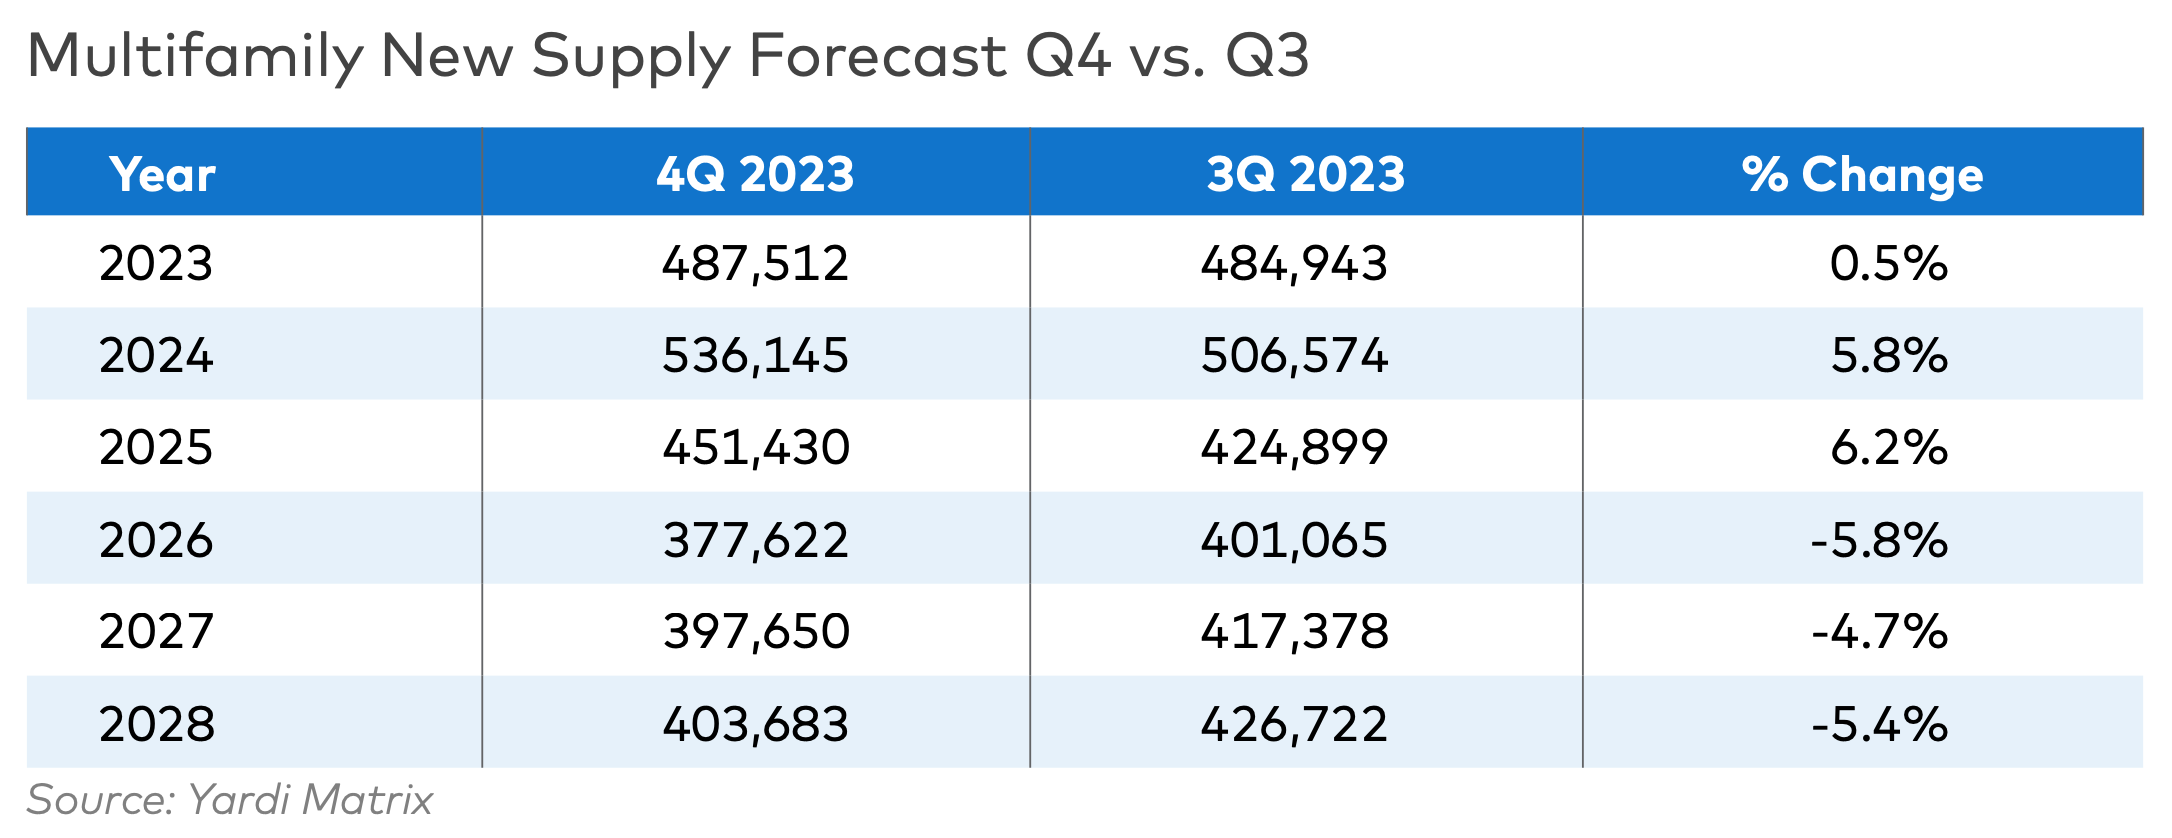 Multifamily New Supply Forecast Q4 vs. Q3